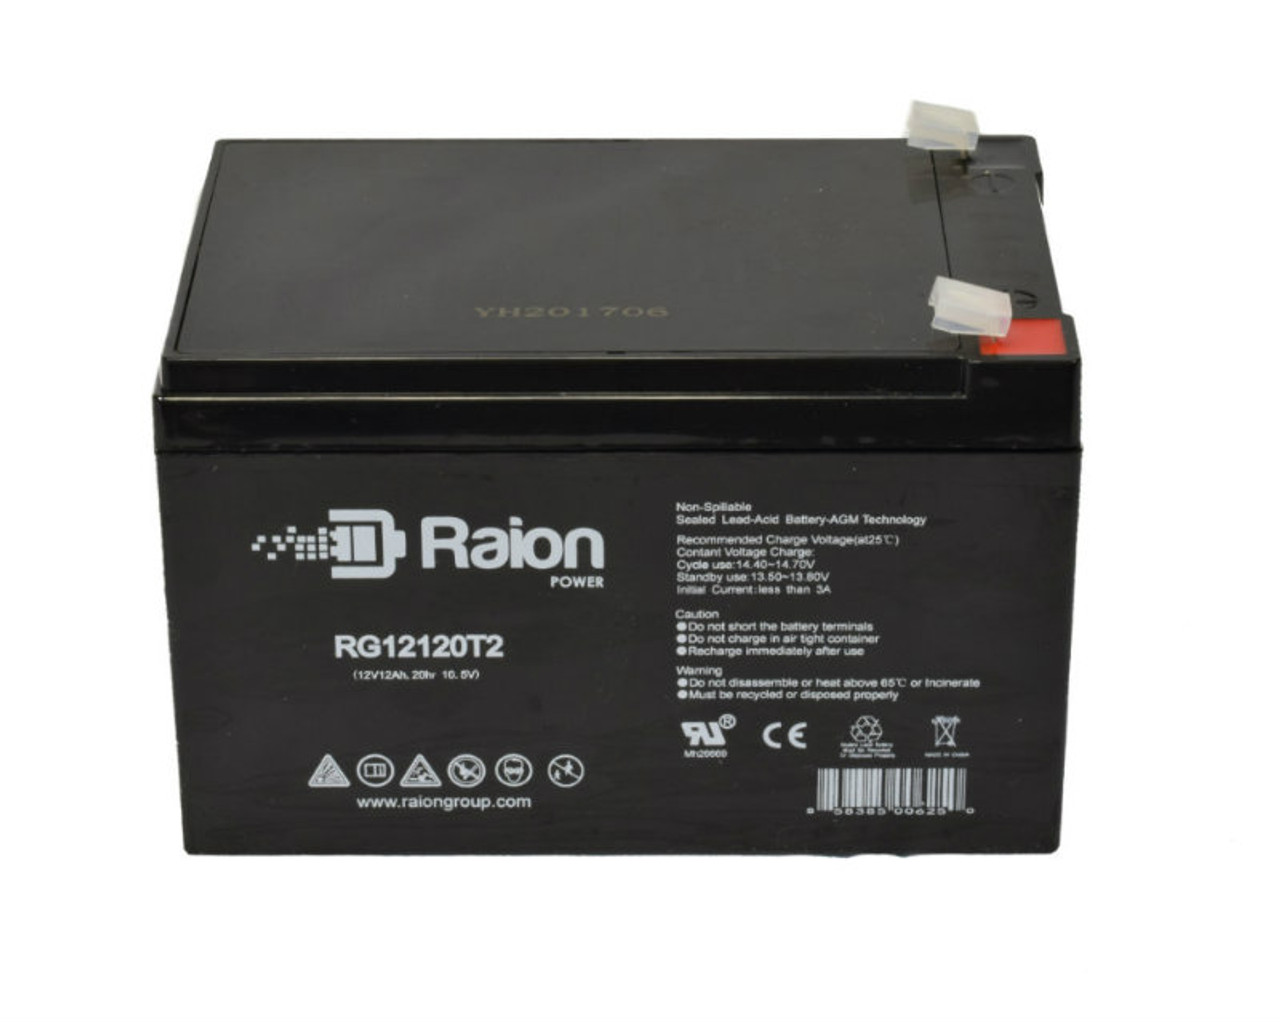 Raion Power RG12120T2 SLA Battery for Oracle FS12120